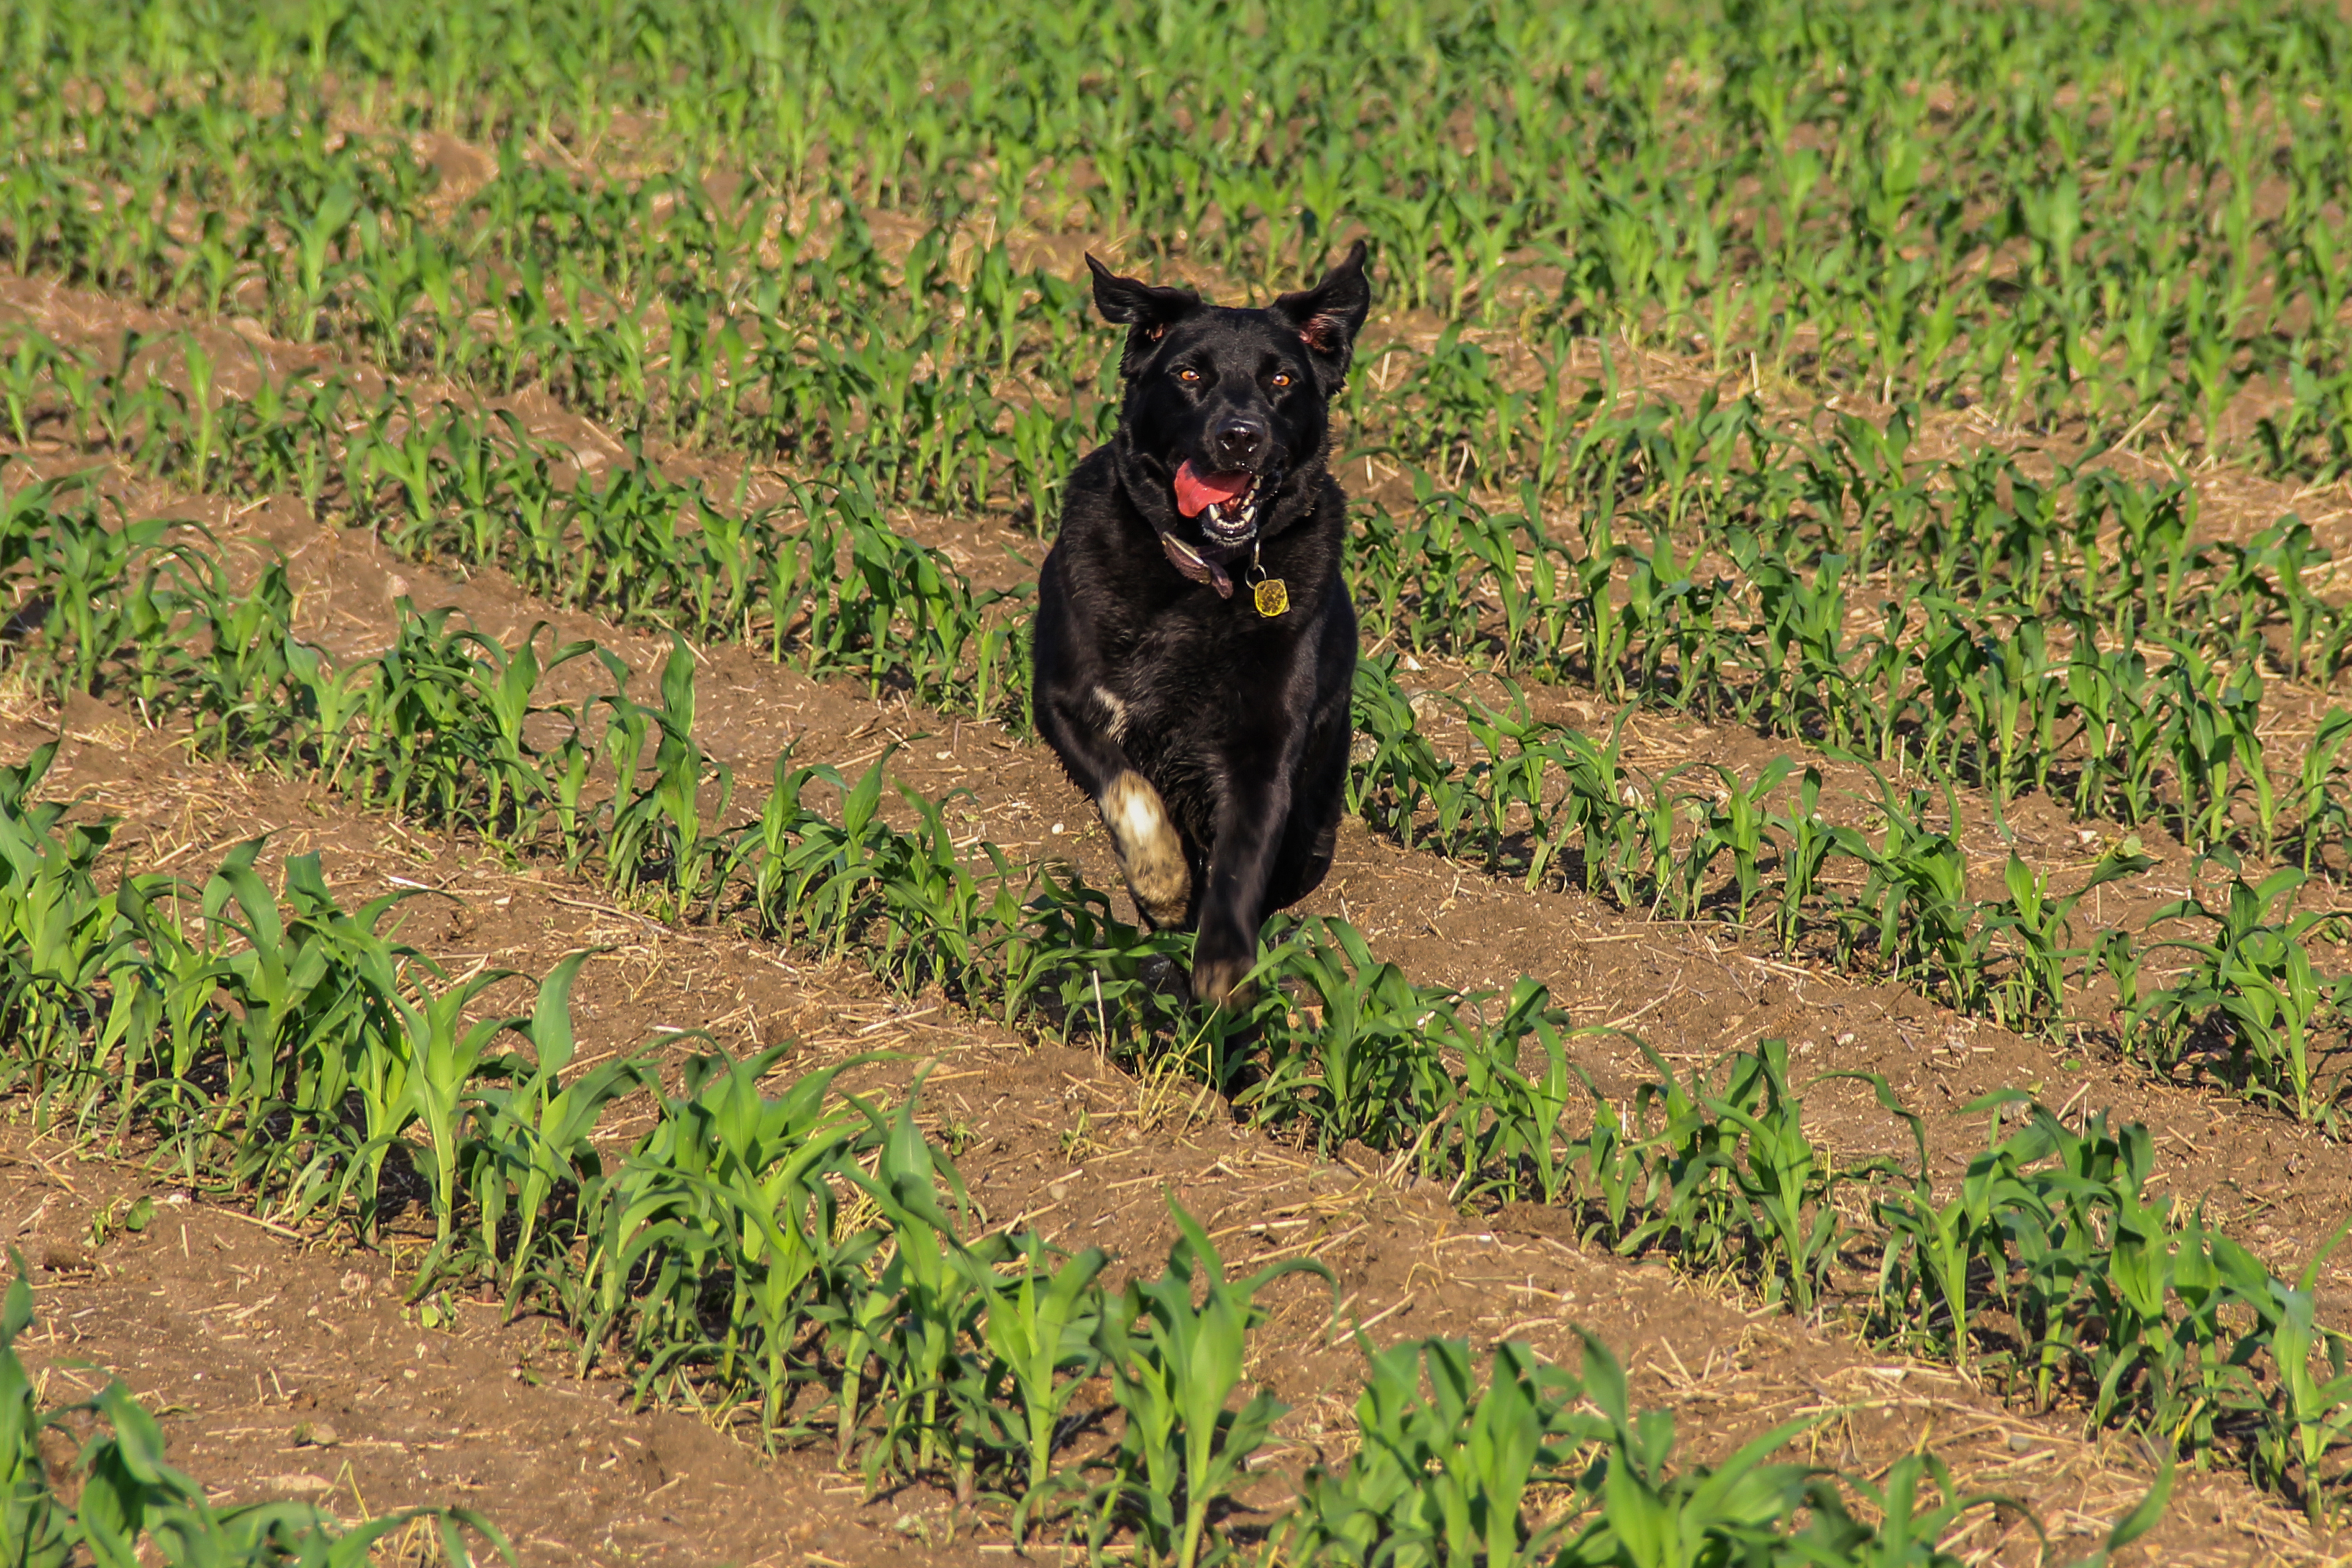 Black dog running through rows of plants